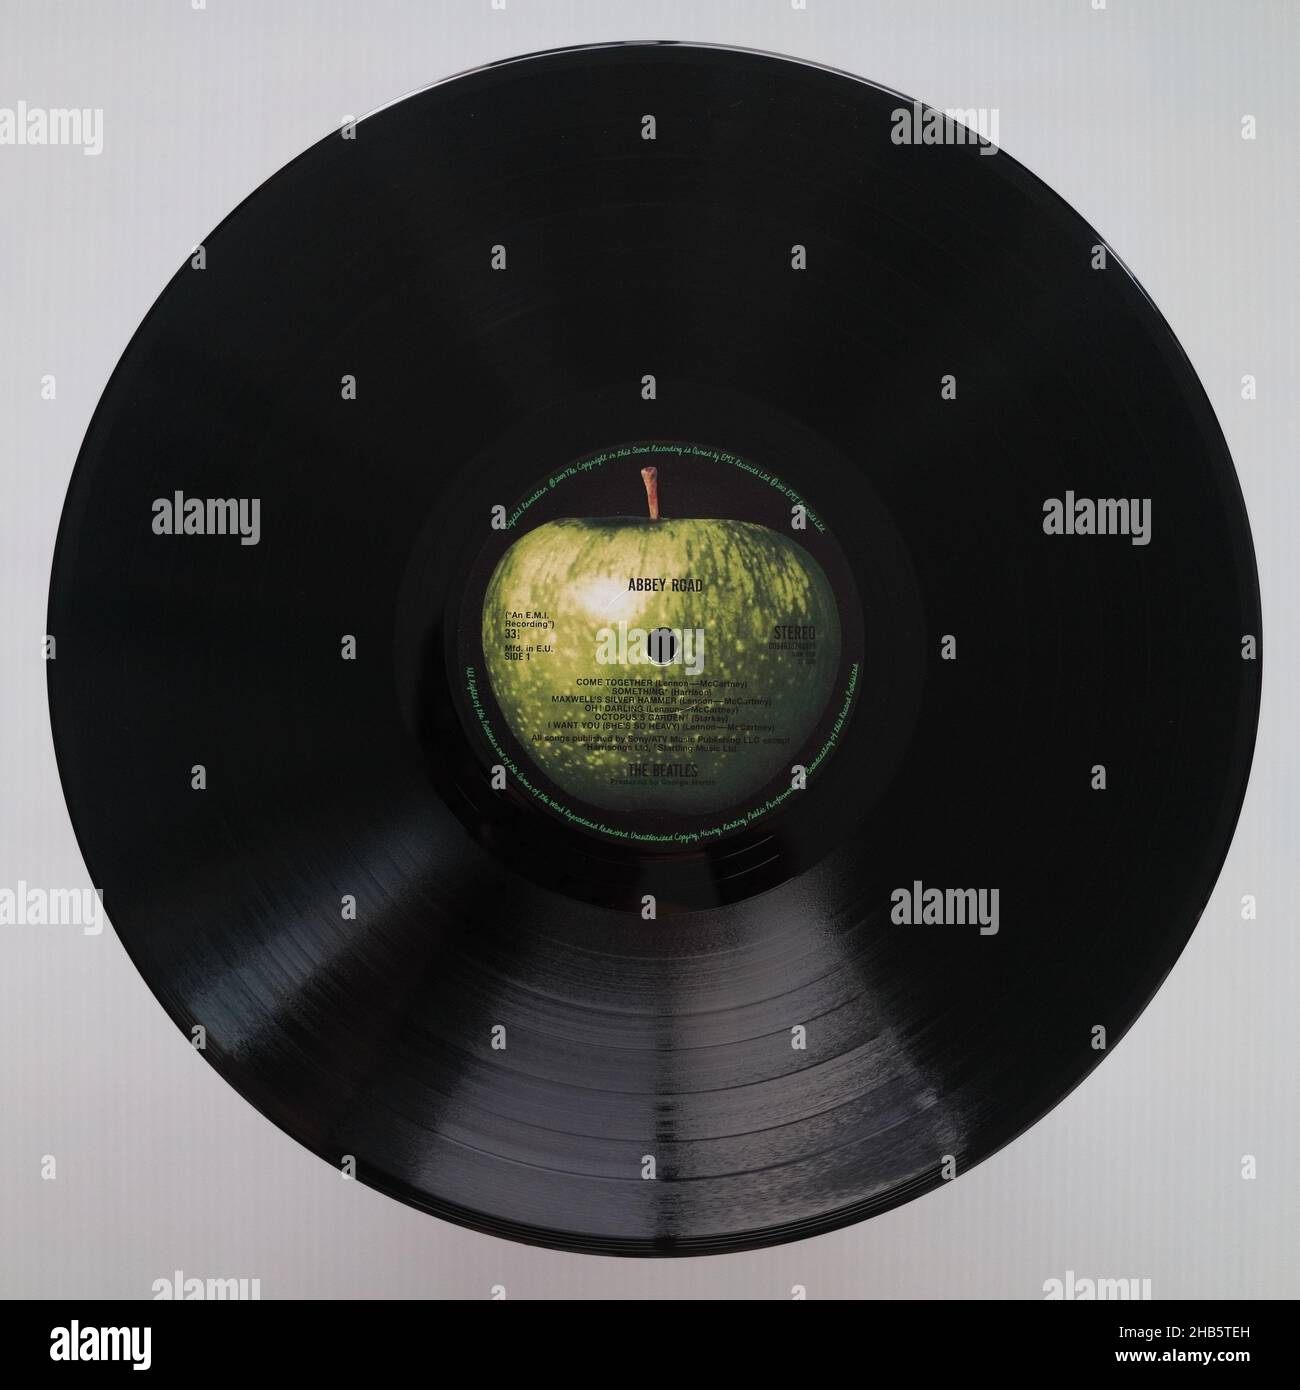 Abbey Road Vinyl-Album LP von den Beatles Stockfoto